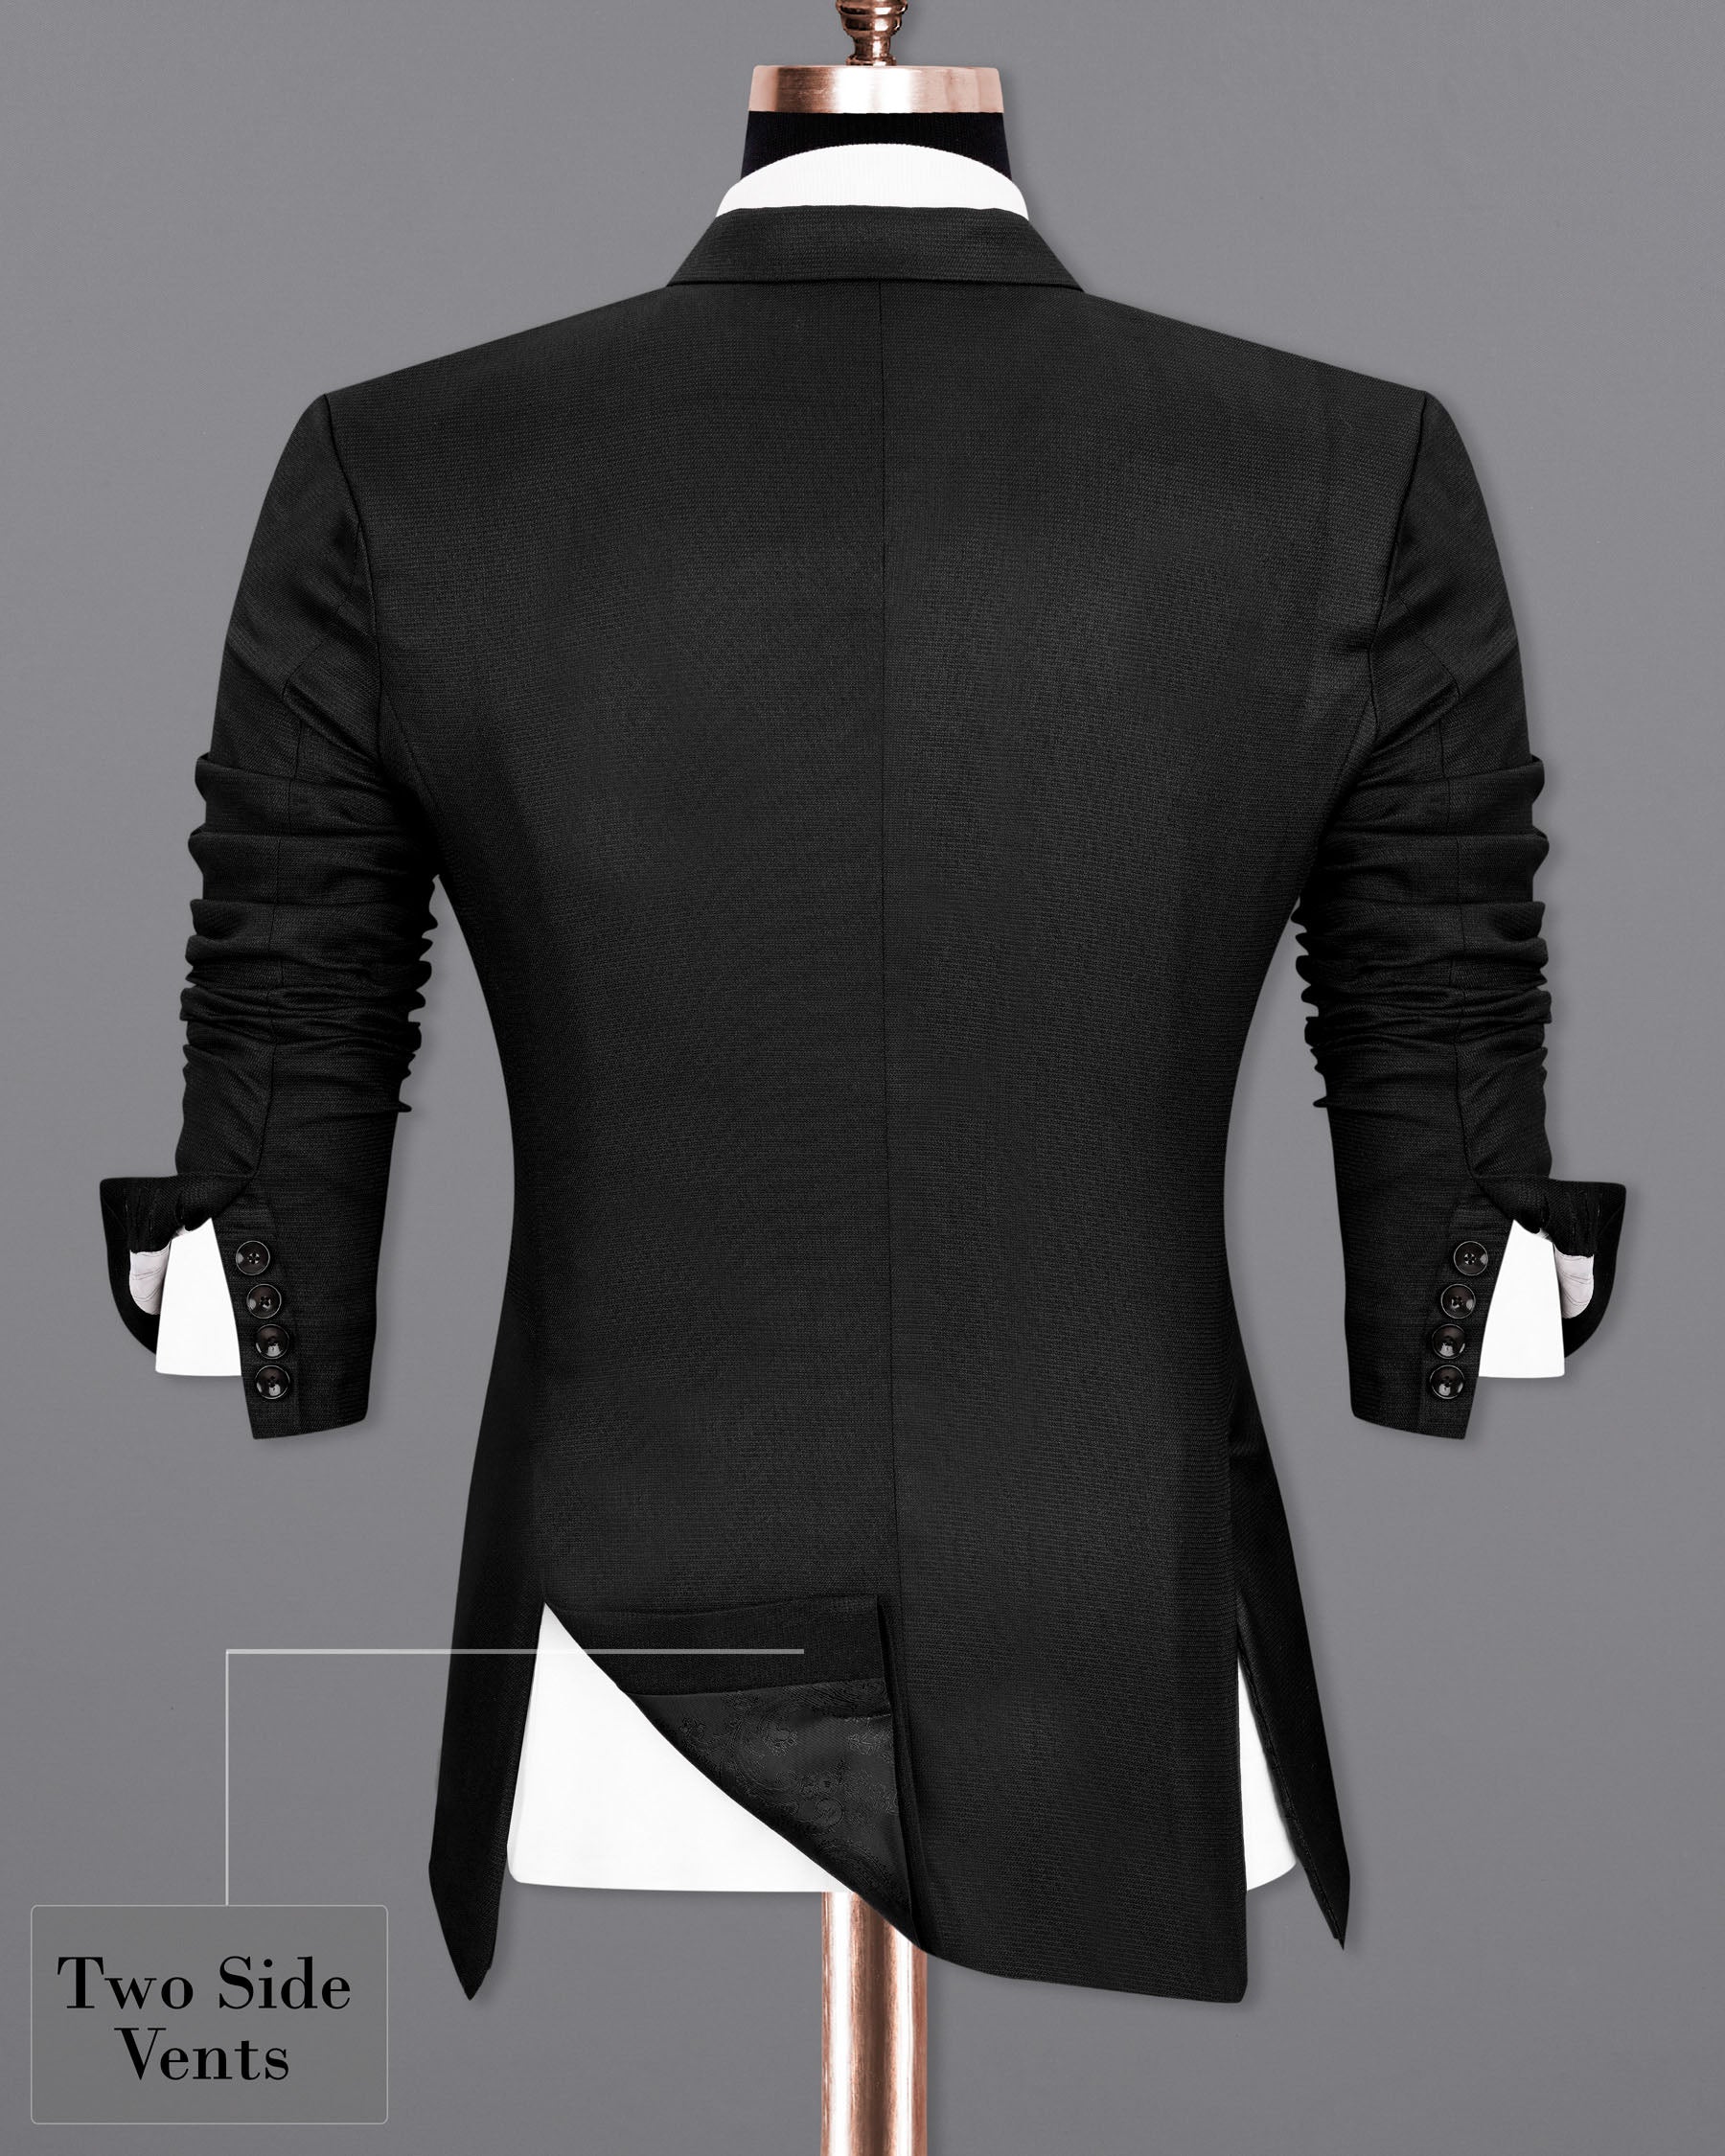 Melanzane Jade Black Double Breasted Suit